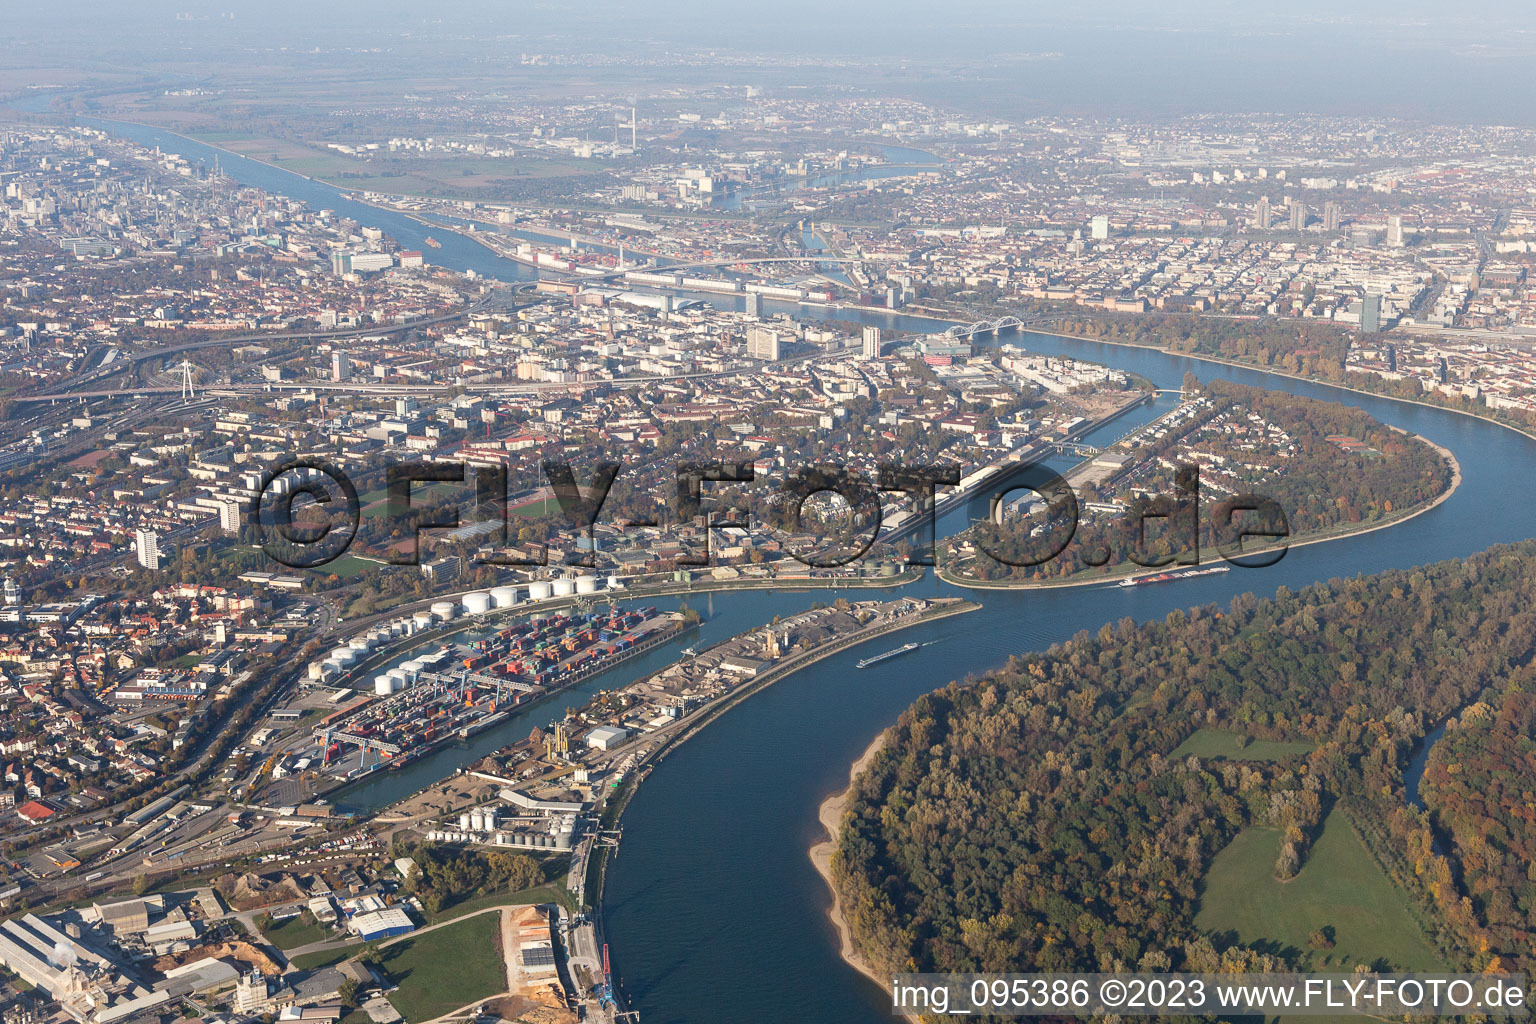 Aerial photograpy of District Rheingönheim in Ludwigshafen am Rhein in the state Rhineland-Palatinate, Germany